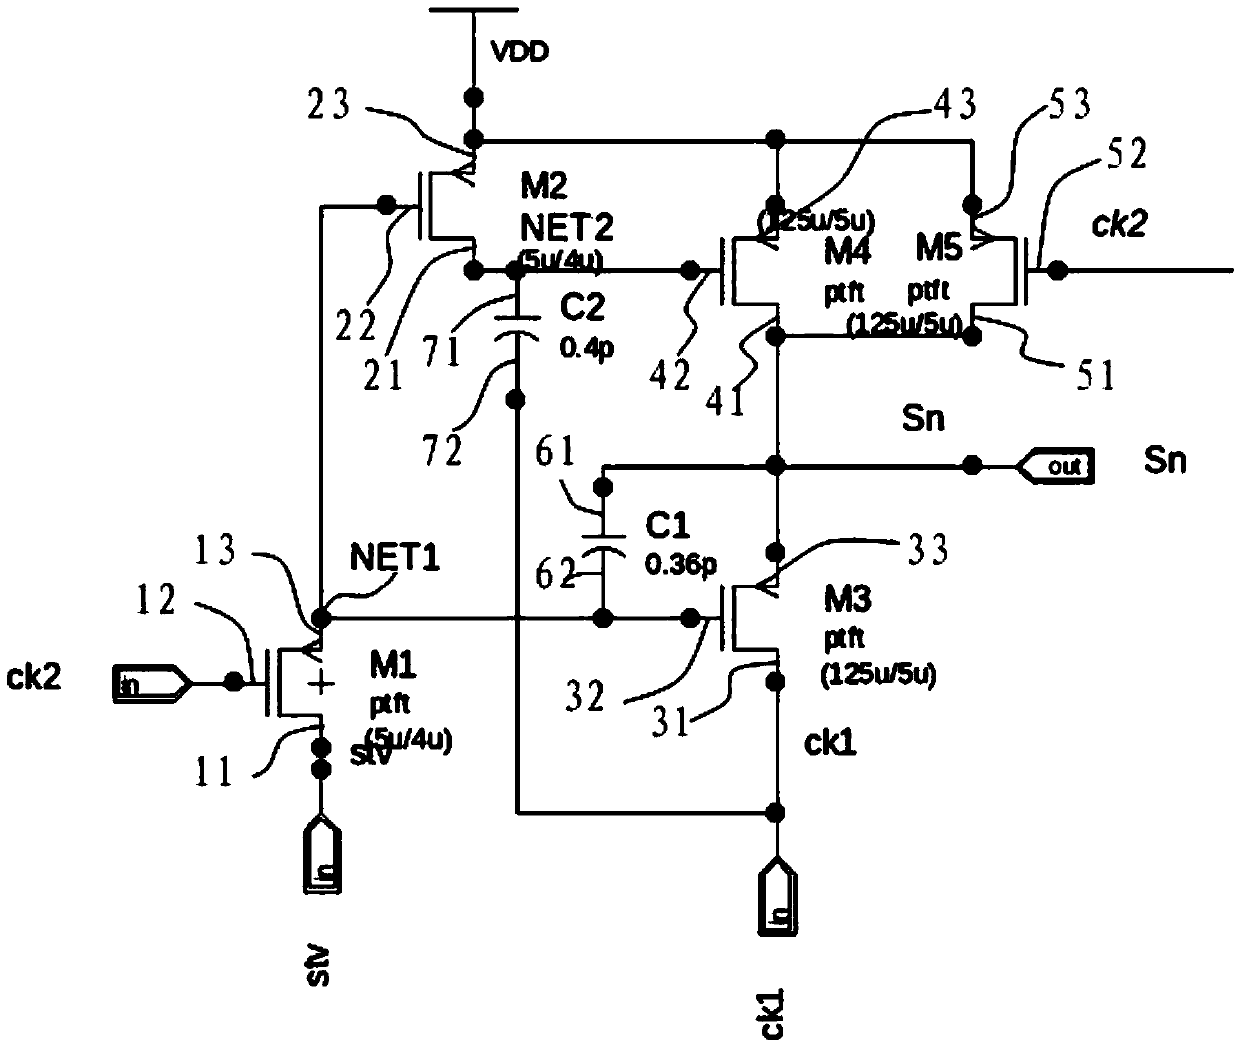 Scanning signal producing circuit